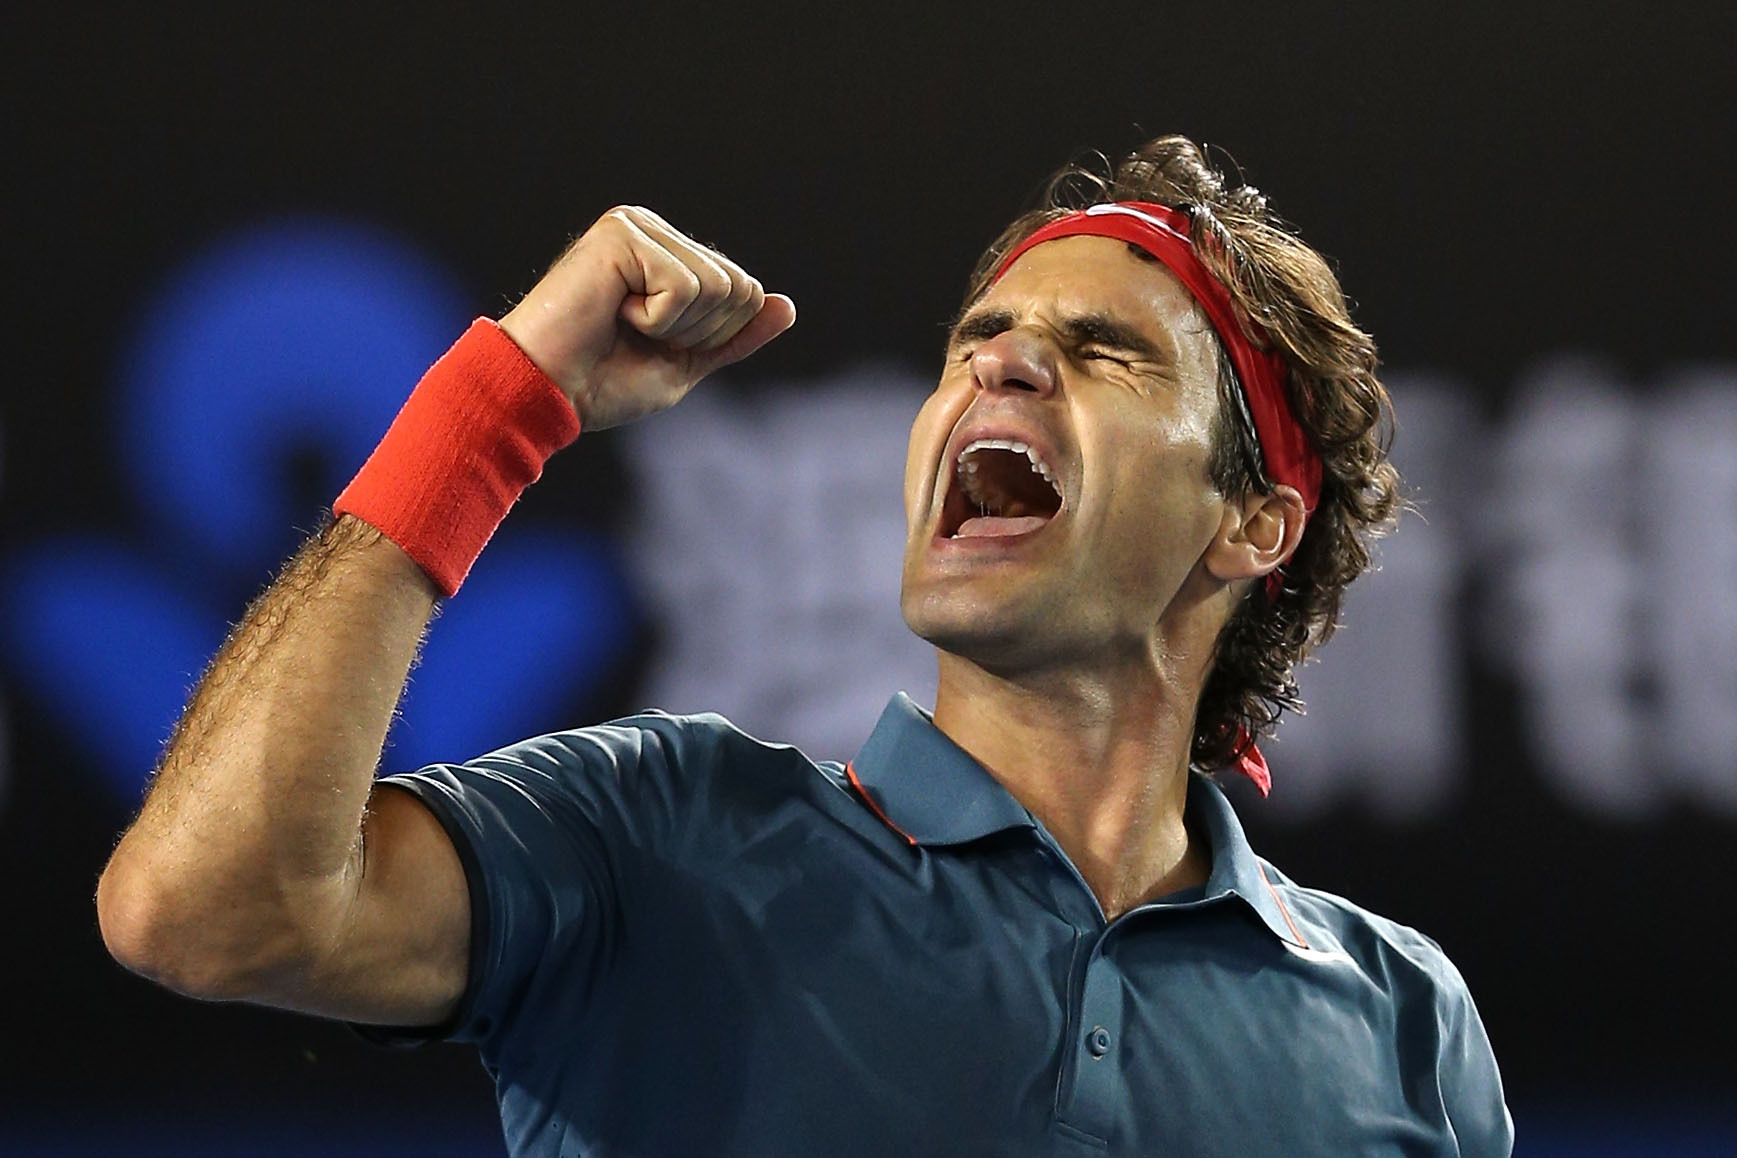 Federer celebra una victoria en el Open de Australia 2014.